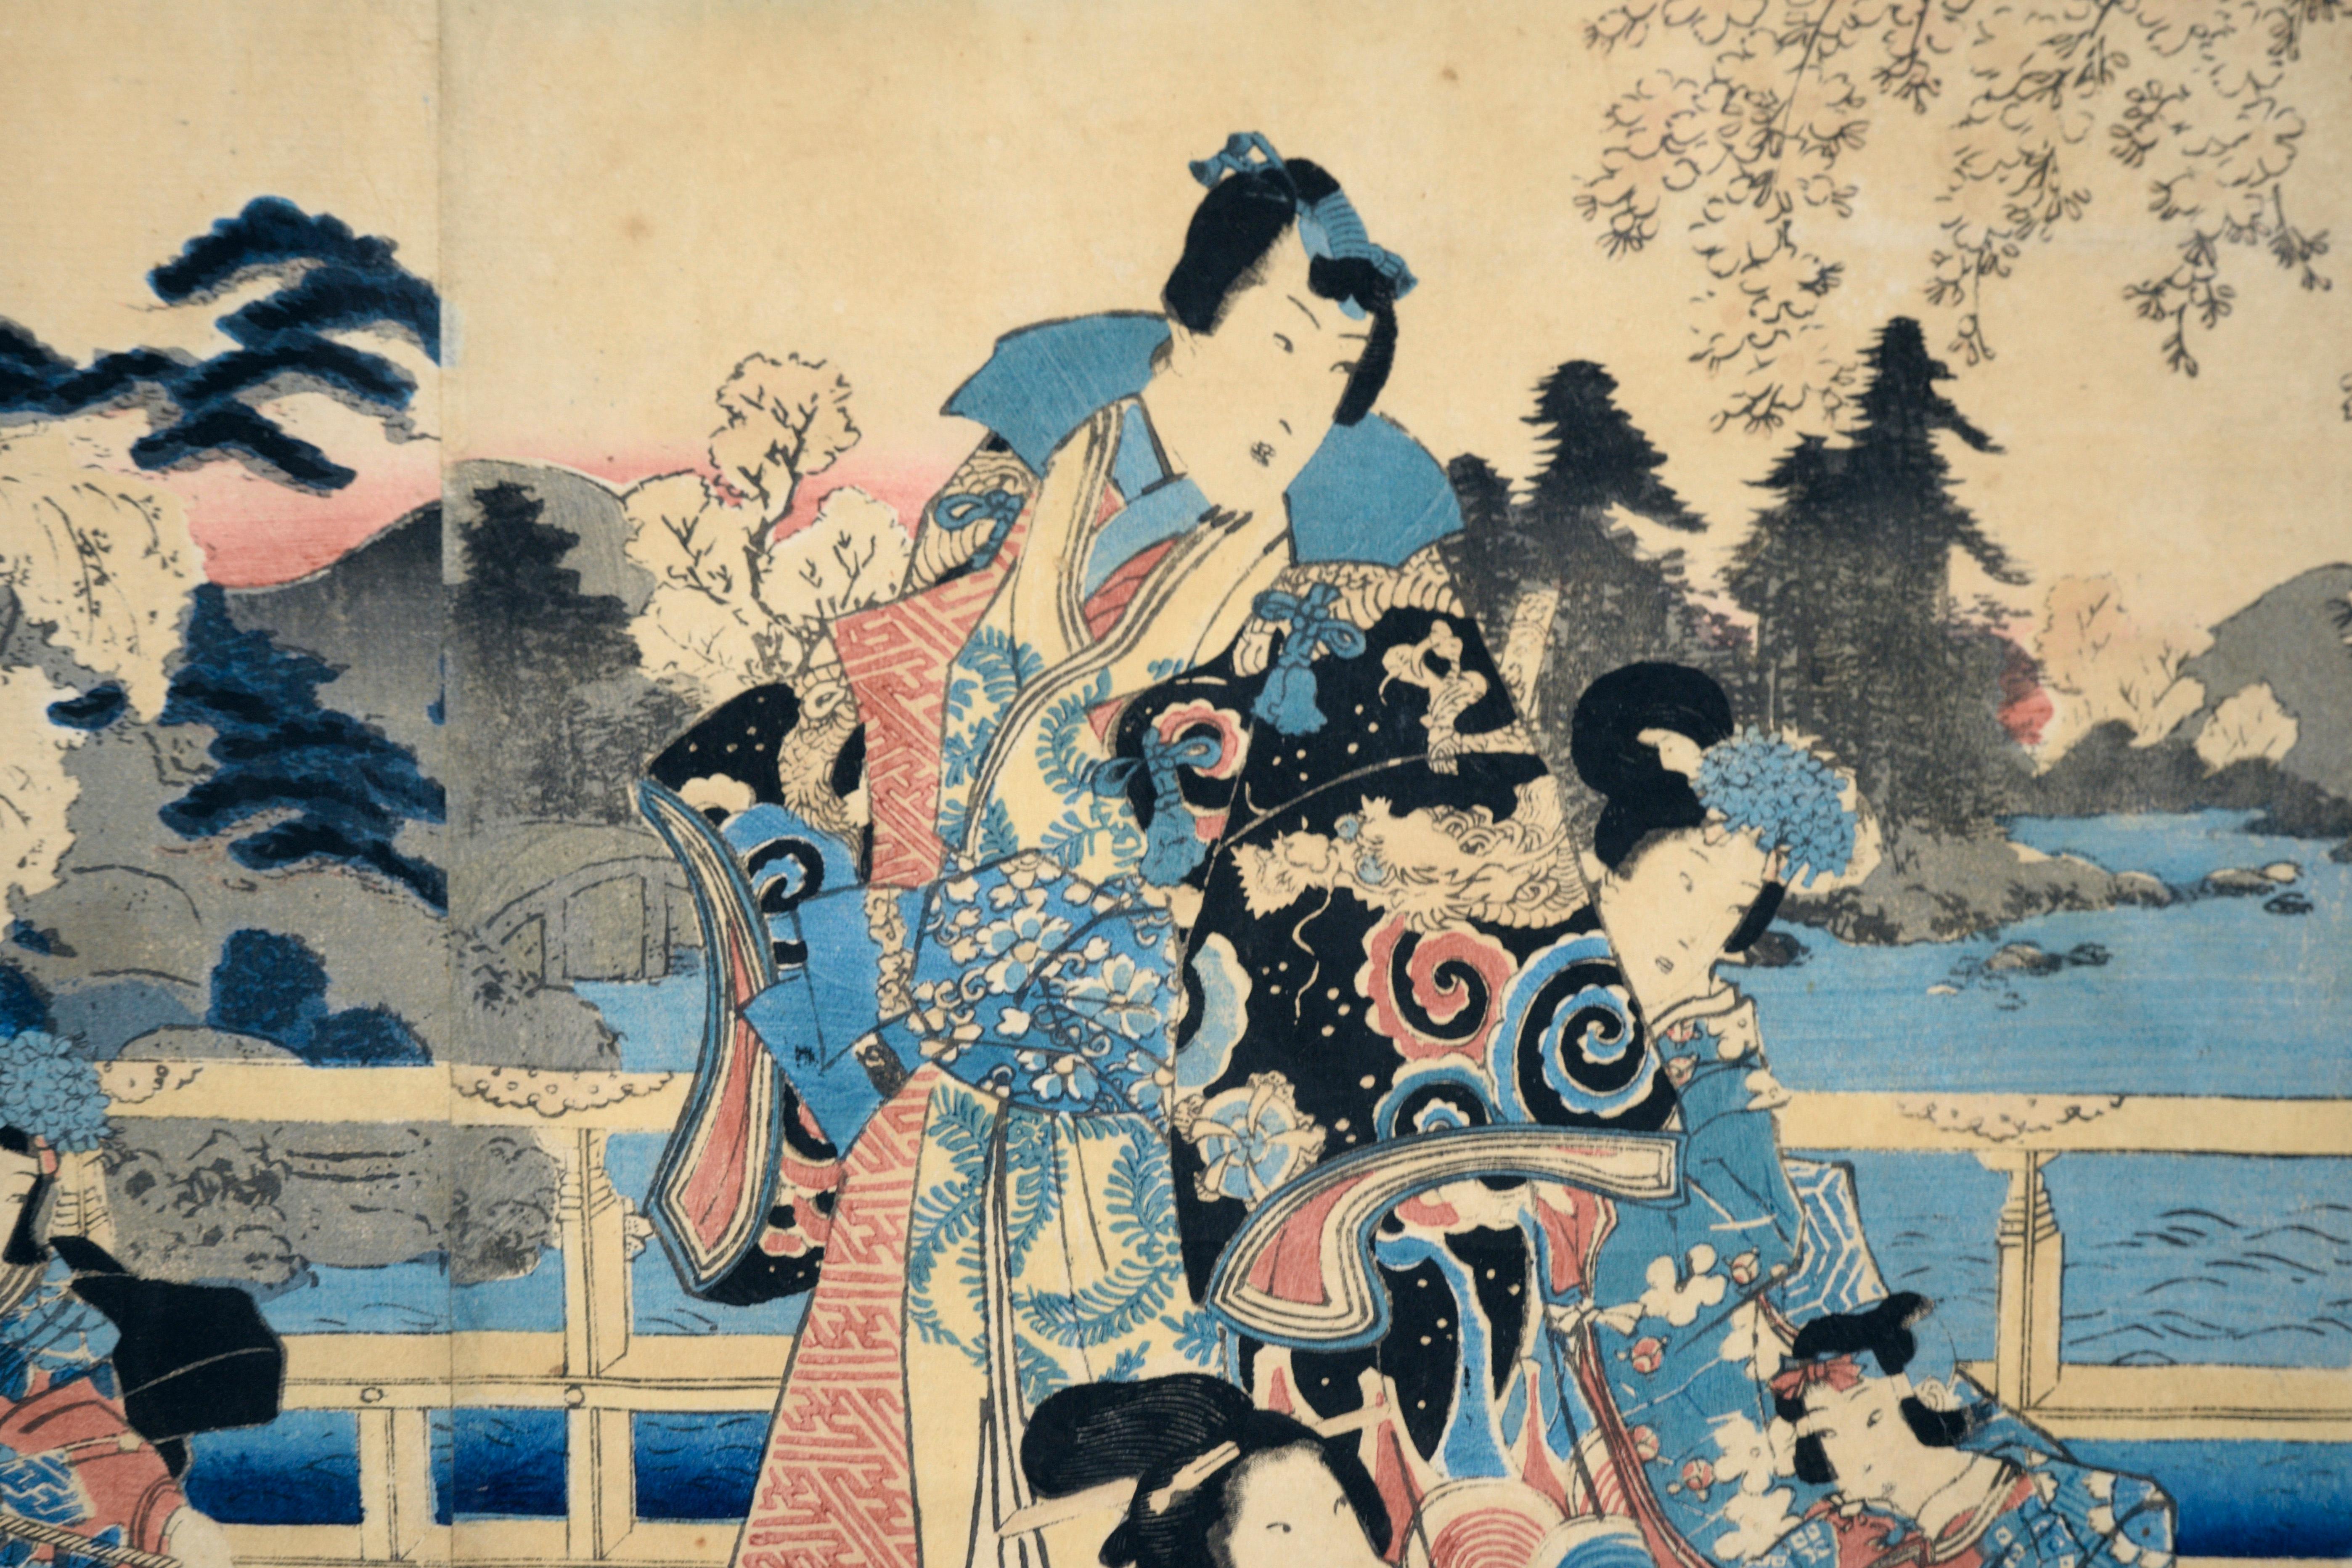 Elegant Amusements of Eastern Genji - Japanese Triptych Woodblock Print on Paper

Dynamic woodblock print with several elegantly dressed figures by Utagawa Kunisada I (Toyokuni III) (Japanese, 1786-1864). Several well dressed people are gathered